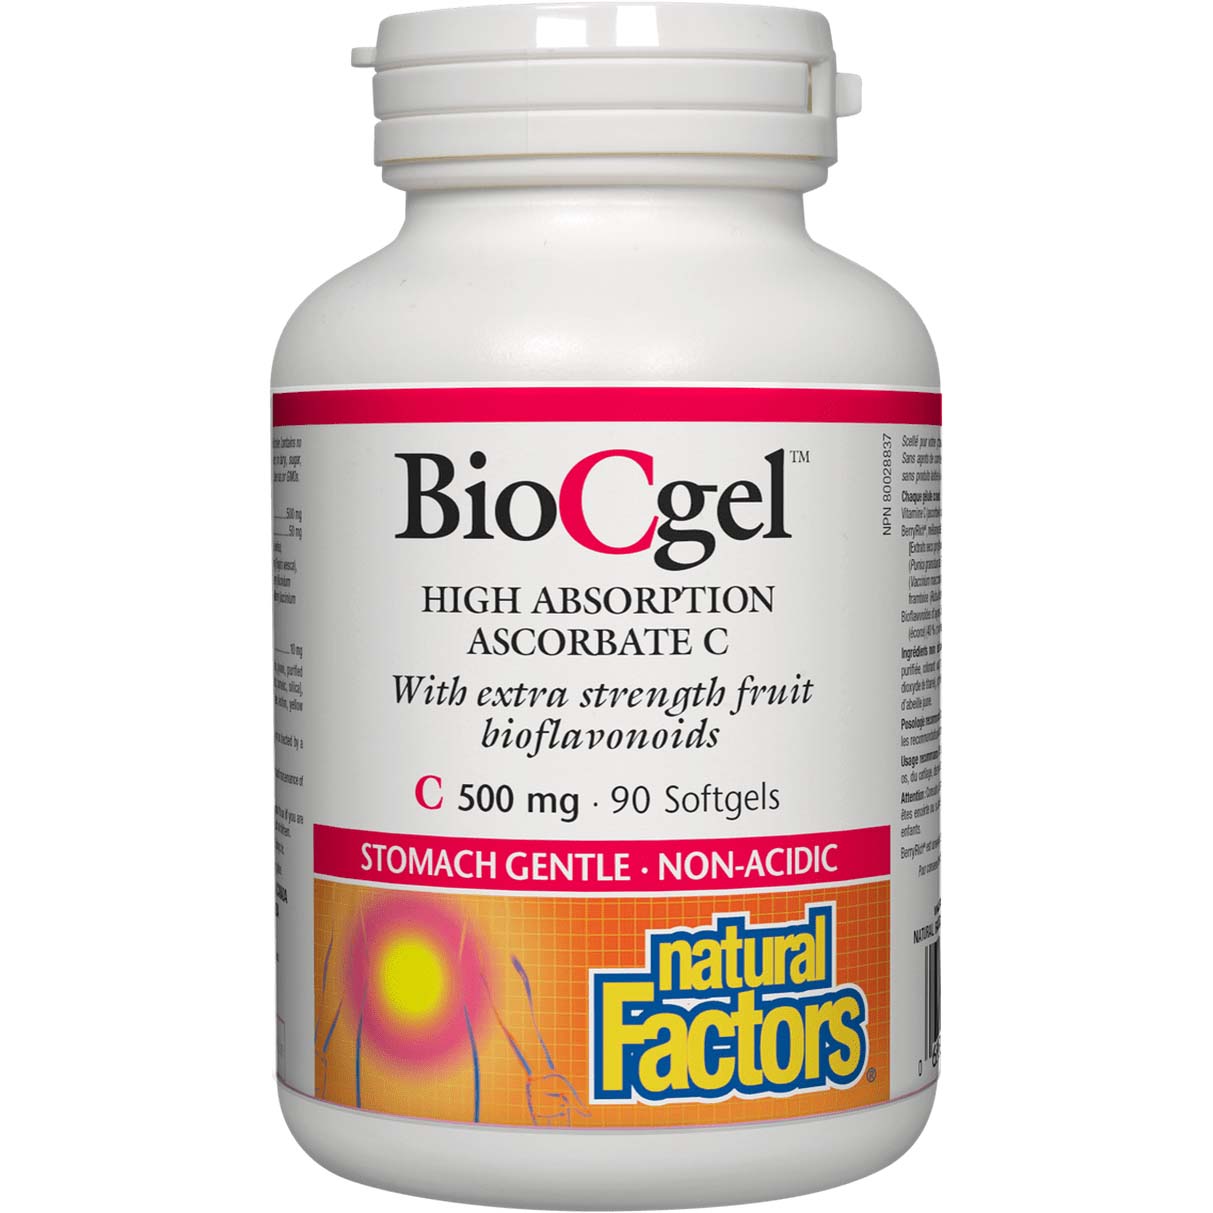 Natural Factors BioCgel High Absorption Ascorbate C, 500 mg, 90 Softgels